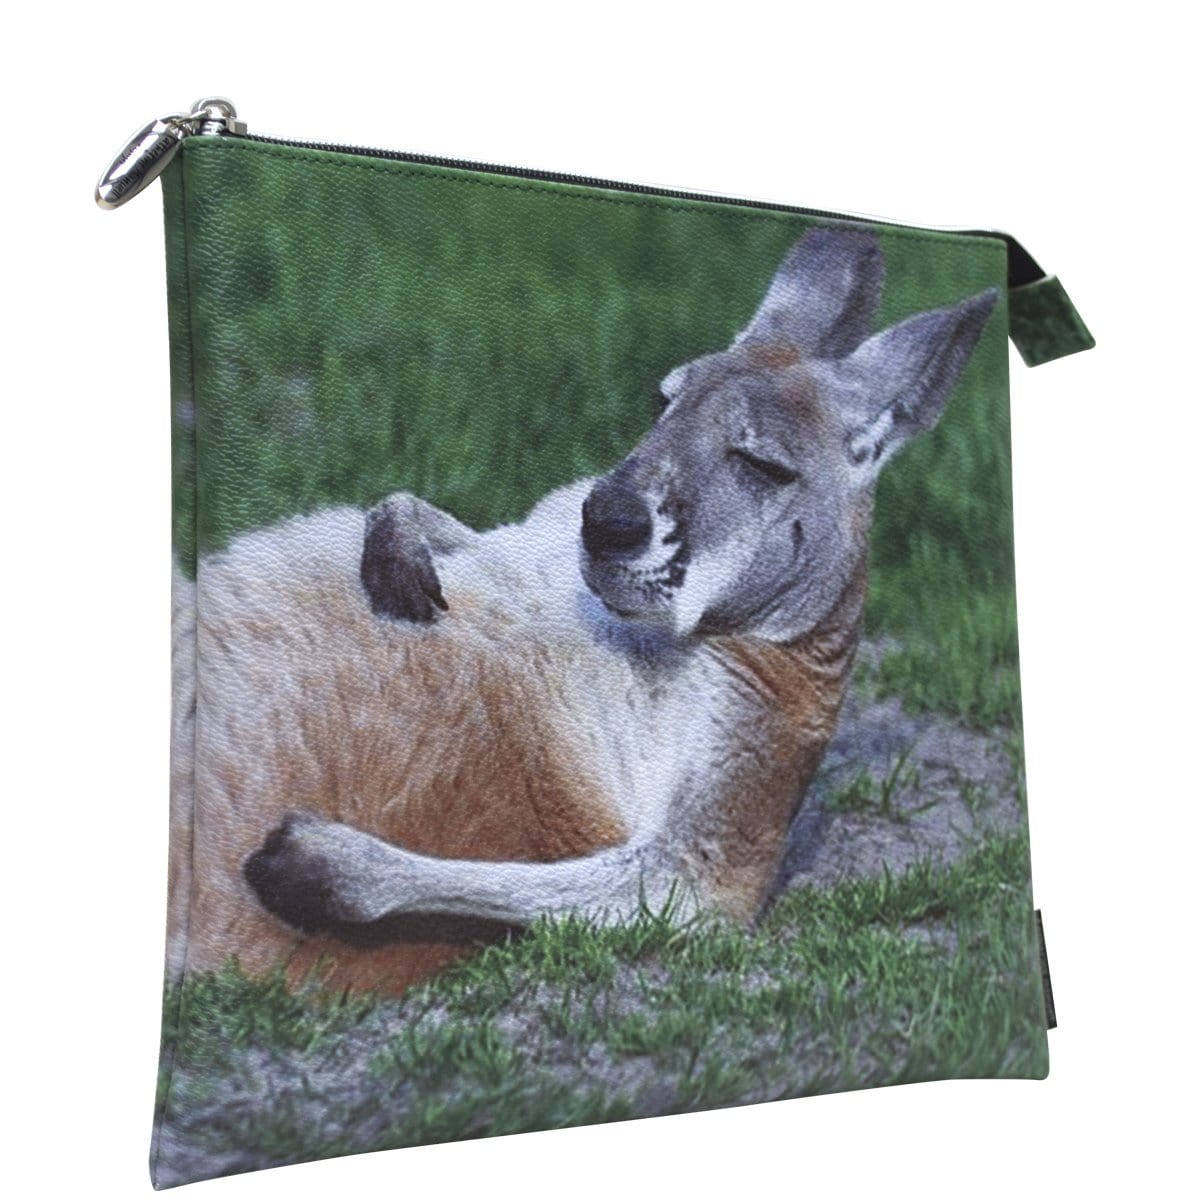 Essentials Pouch - Kangaroo -On Sale